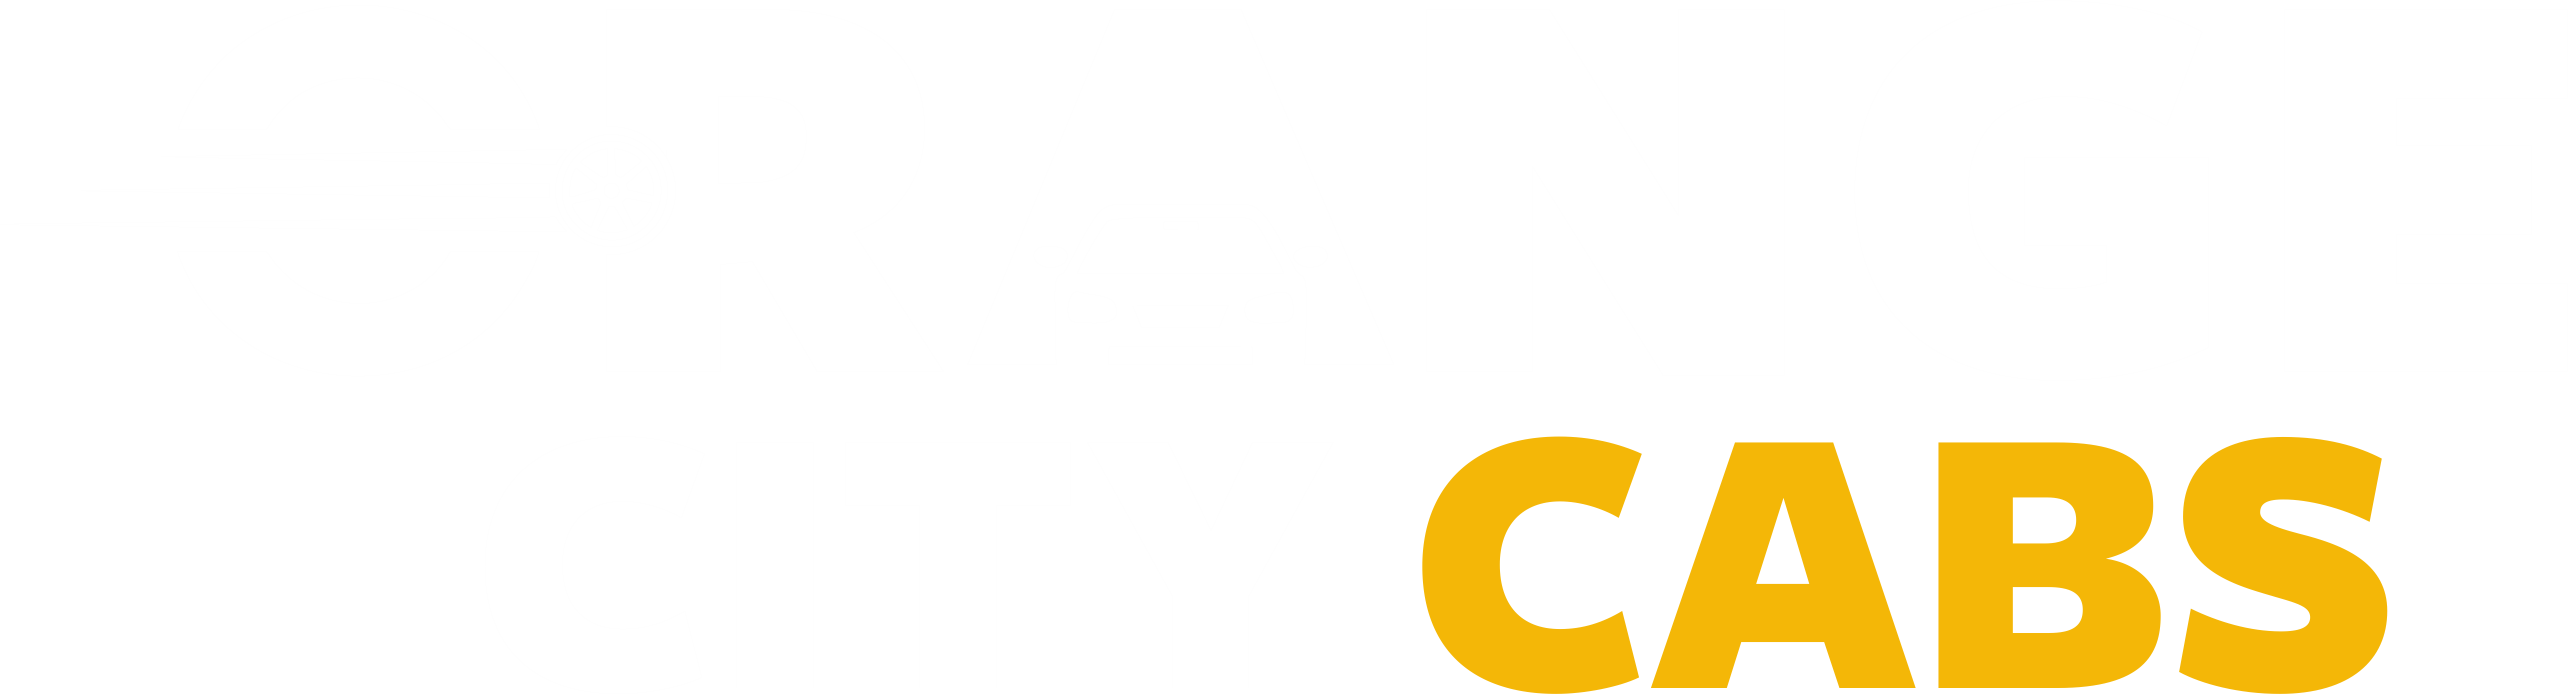 Orange City Cabs